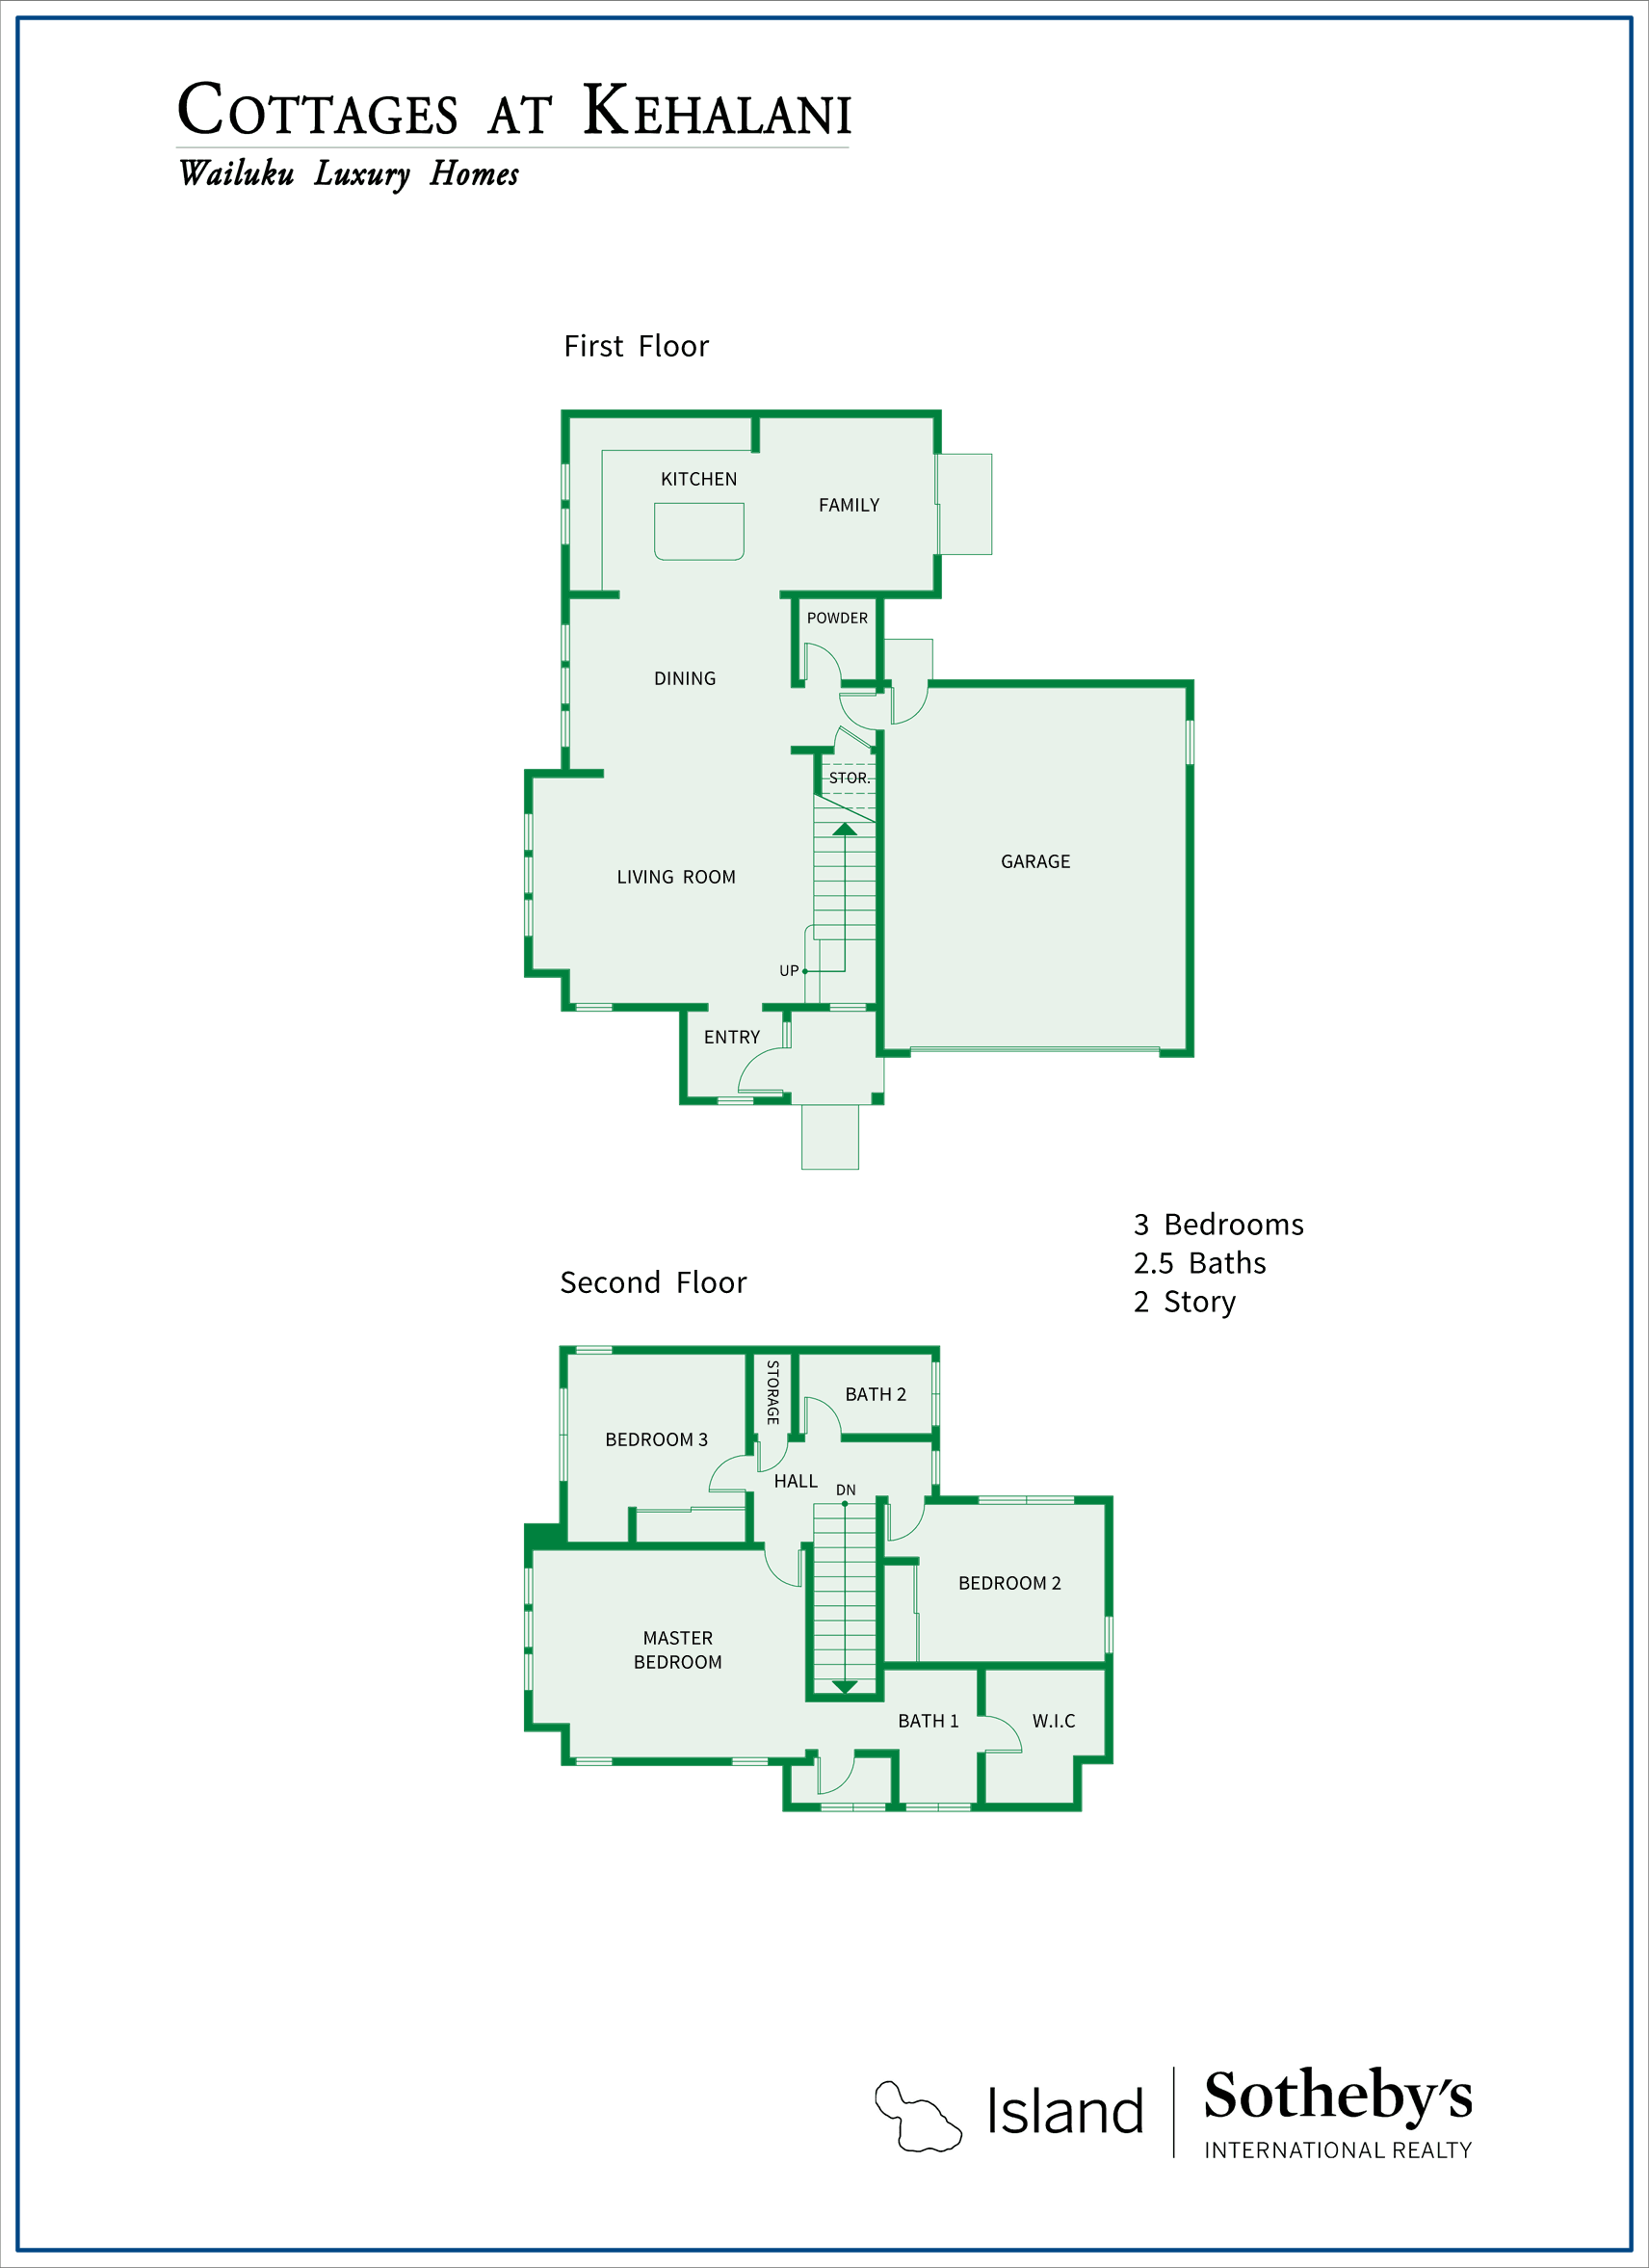 Cottages at Kehalani Floor Plan